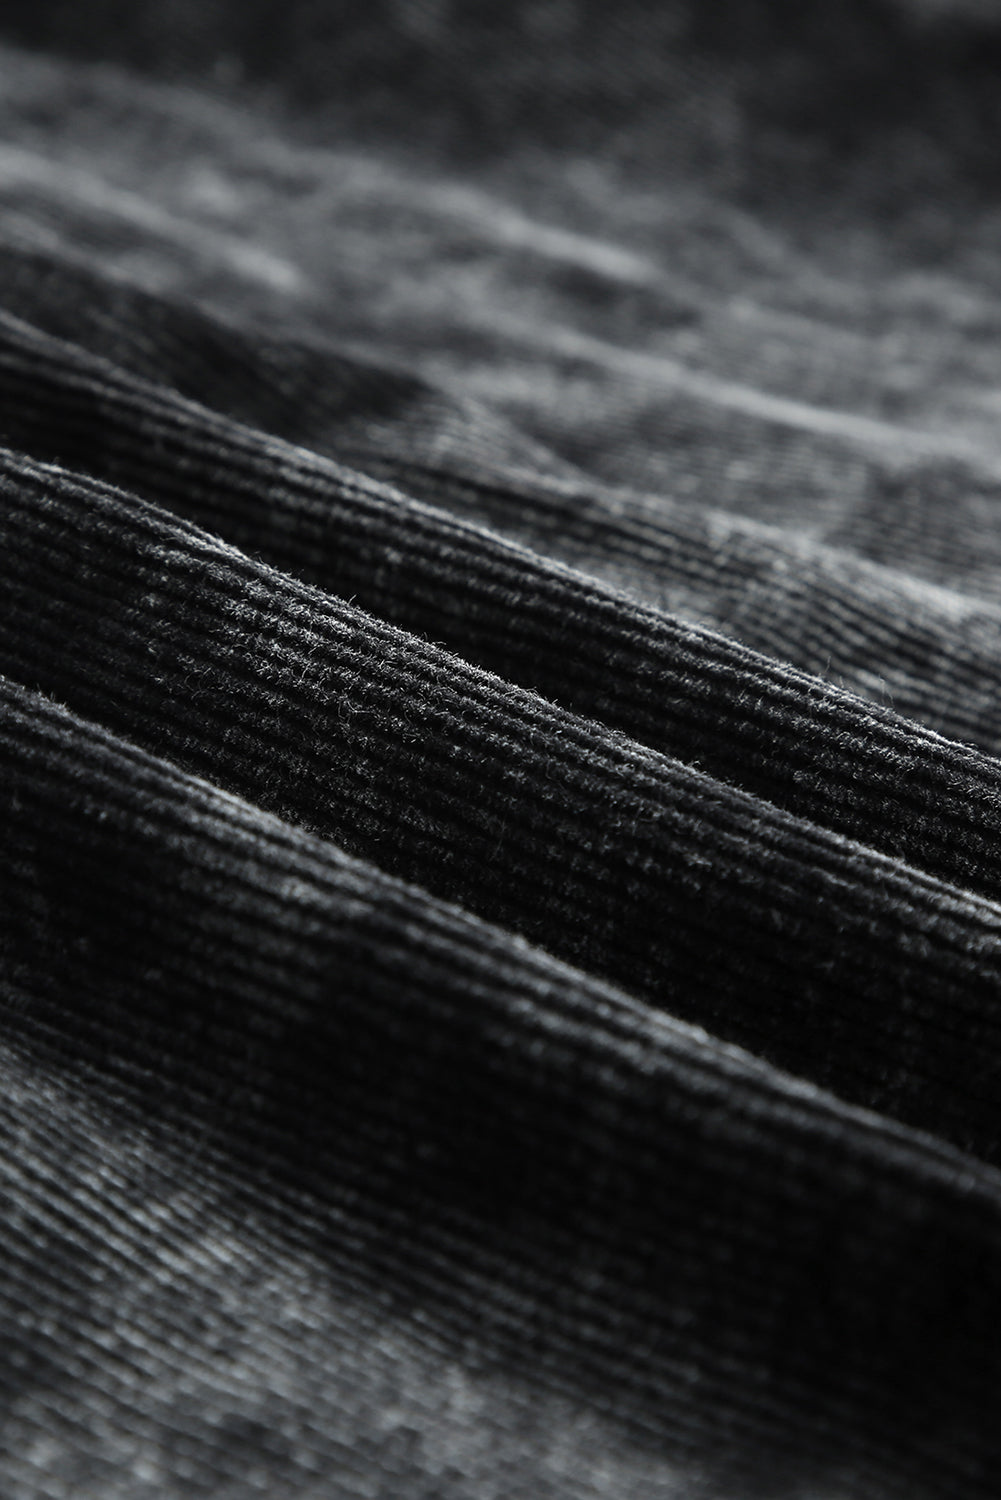 Schwarze, übergroße Vintage-Jacke in Distressed-Mineral-Waschung